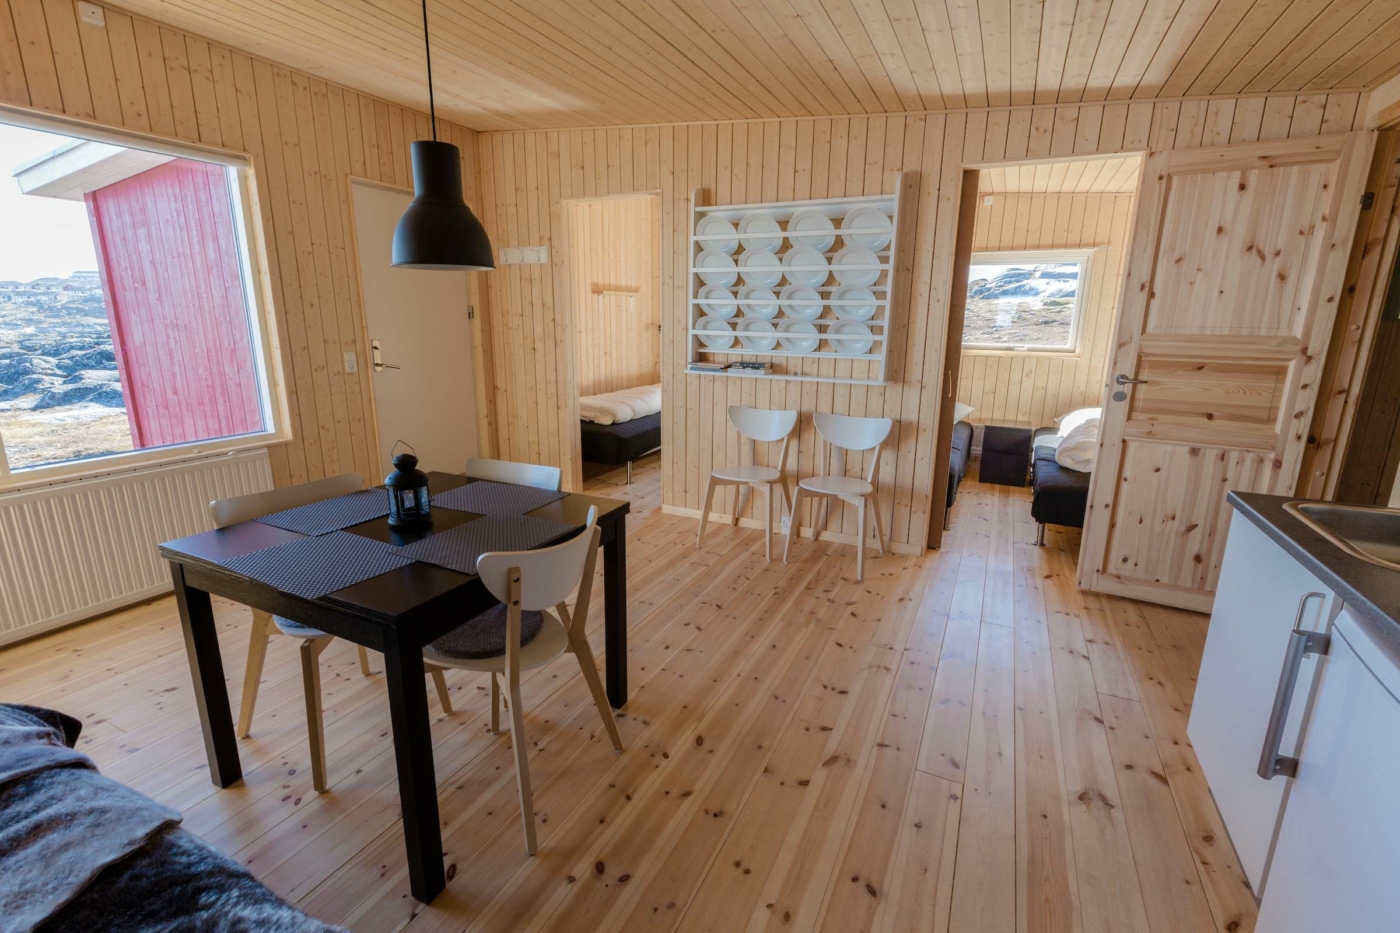 Lodge of Inuk Hostels, Nuuk. Photo by Daniel Gurrola - Visit Greenland